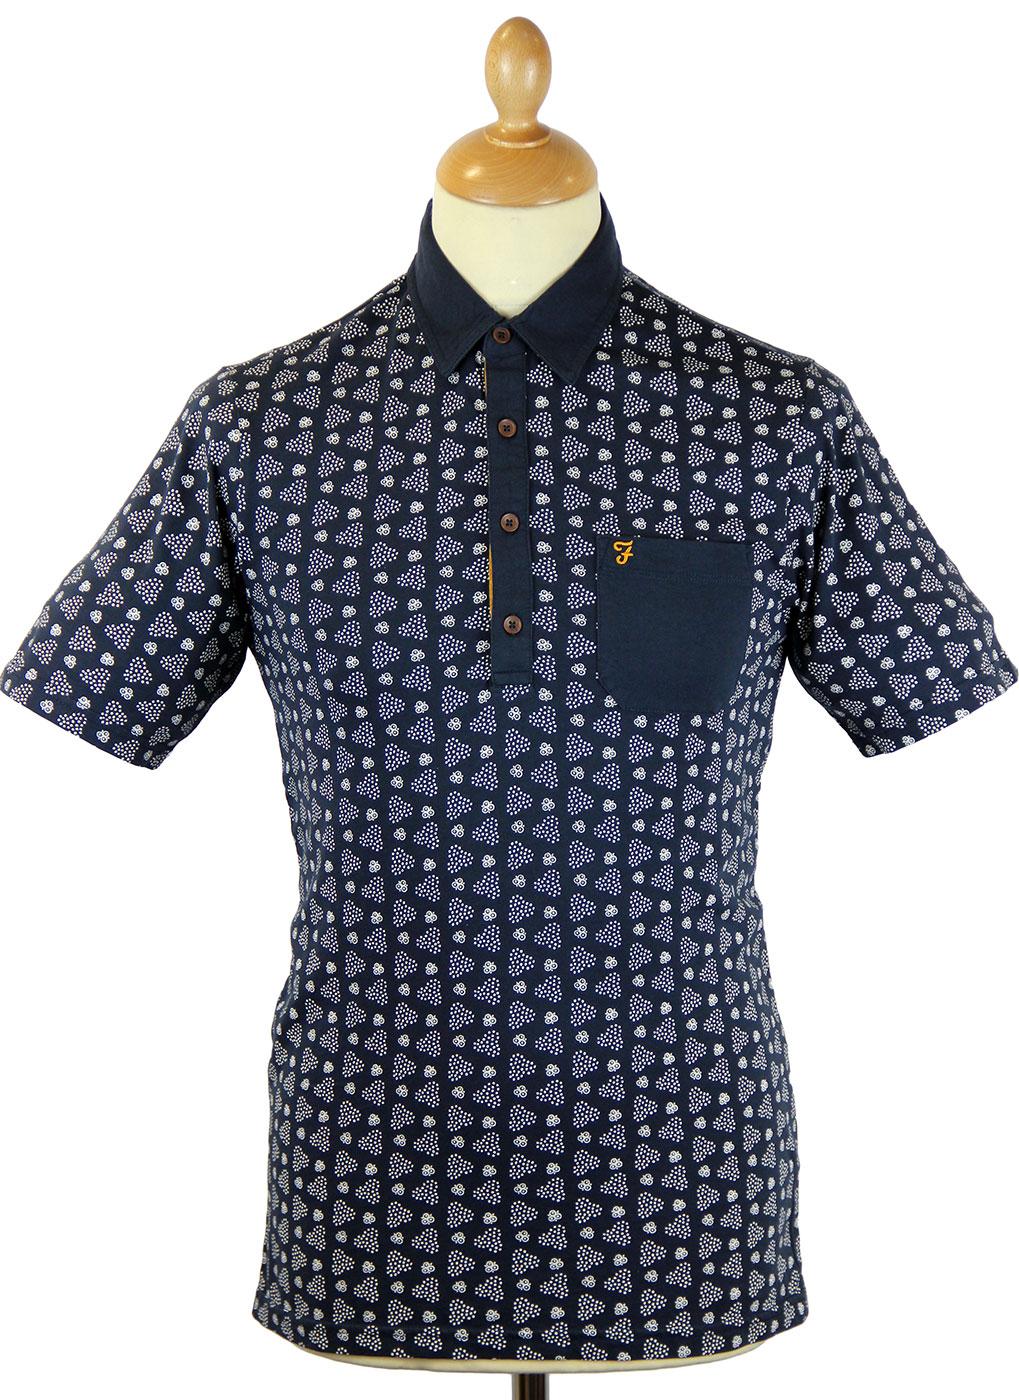 FARAH VINTAGE Mayer Retro 60s Mod Op Art Print Polo Shirt Navy